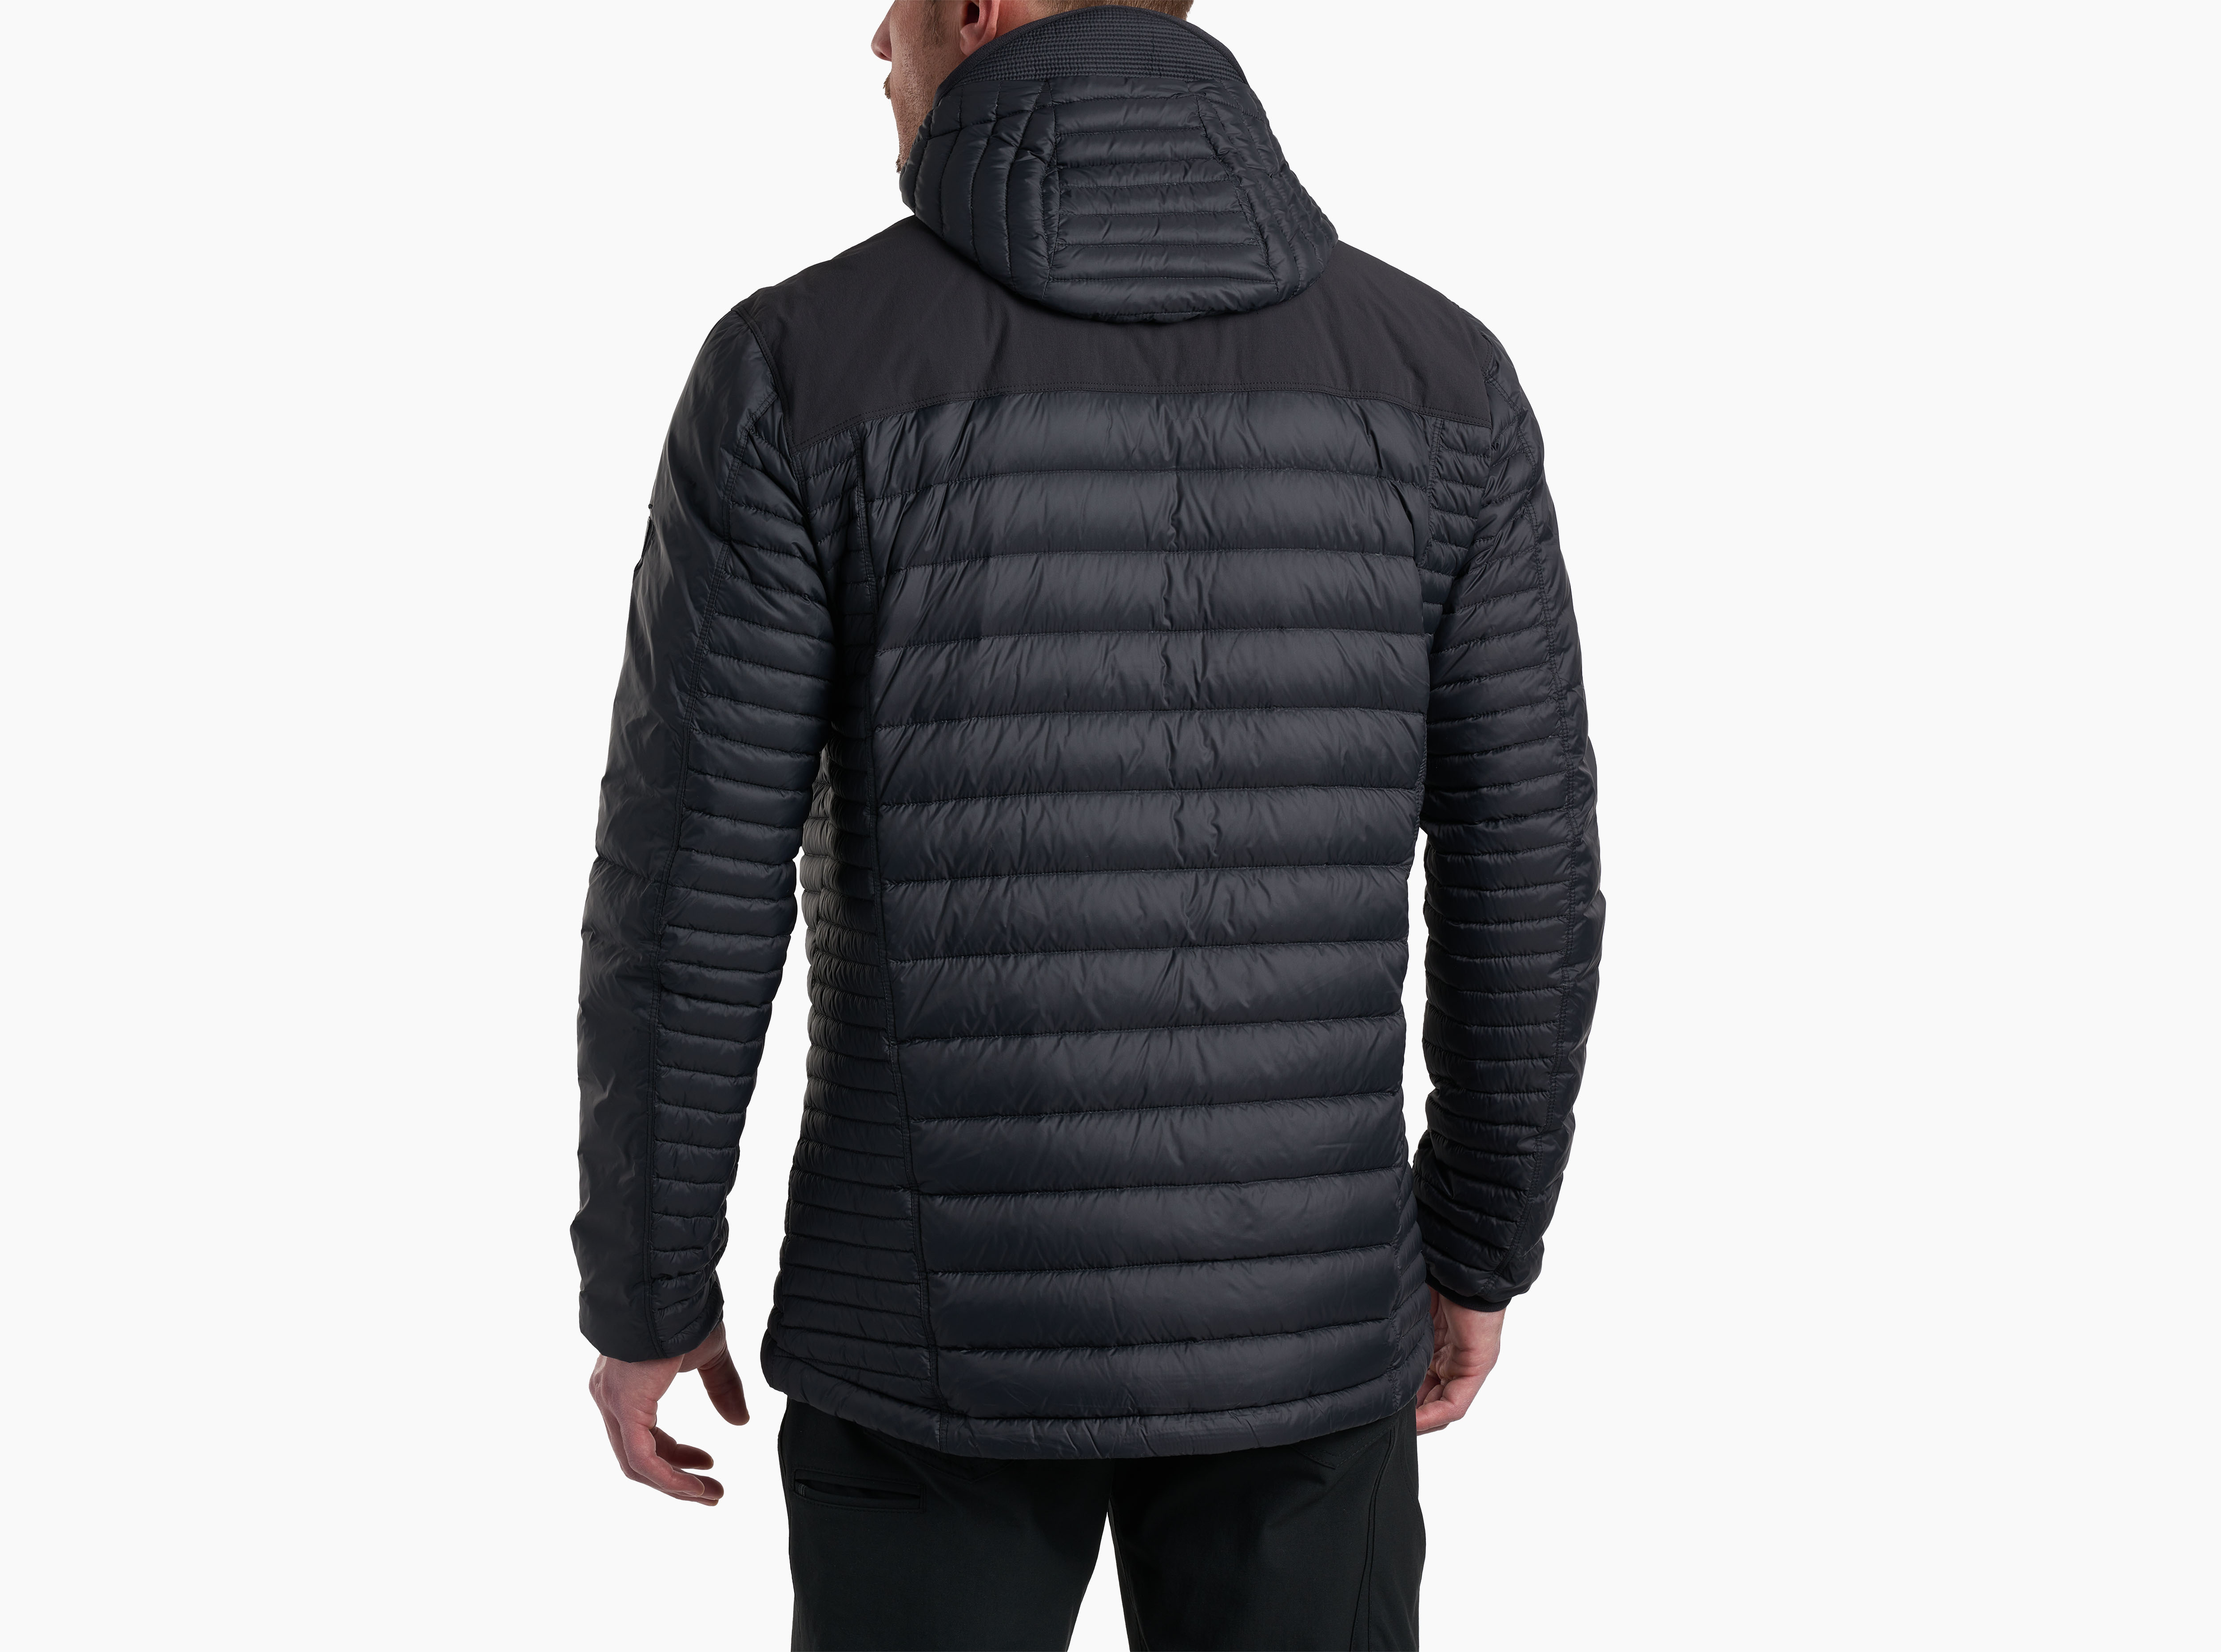 Kuhl Spyfire Hoody Jacket, Size XL - Black for sale online